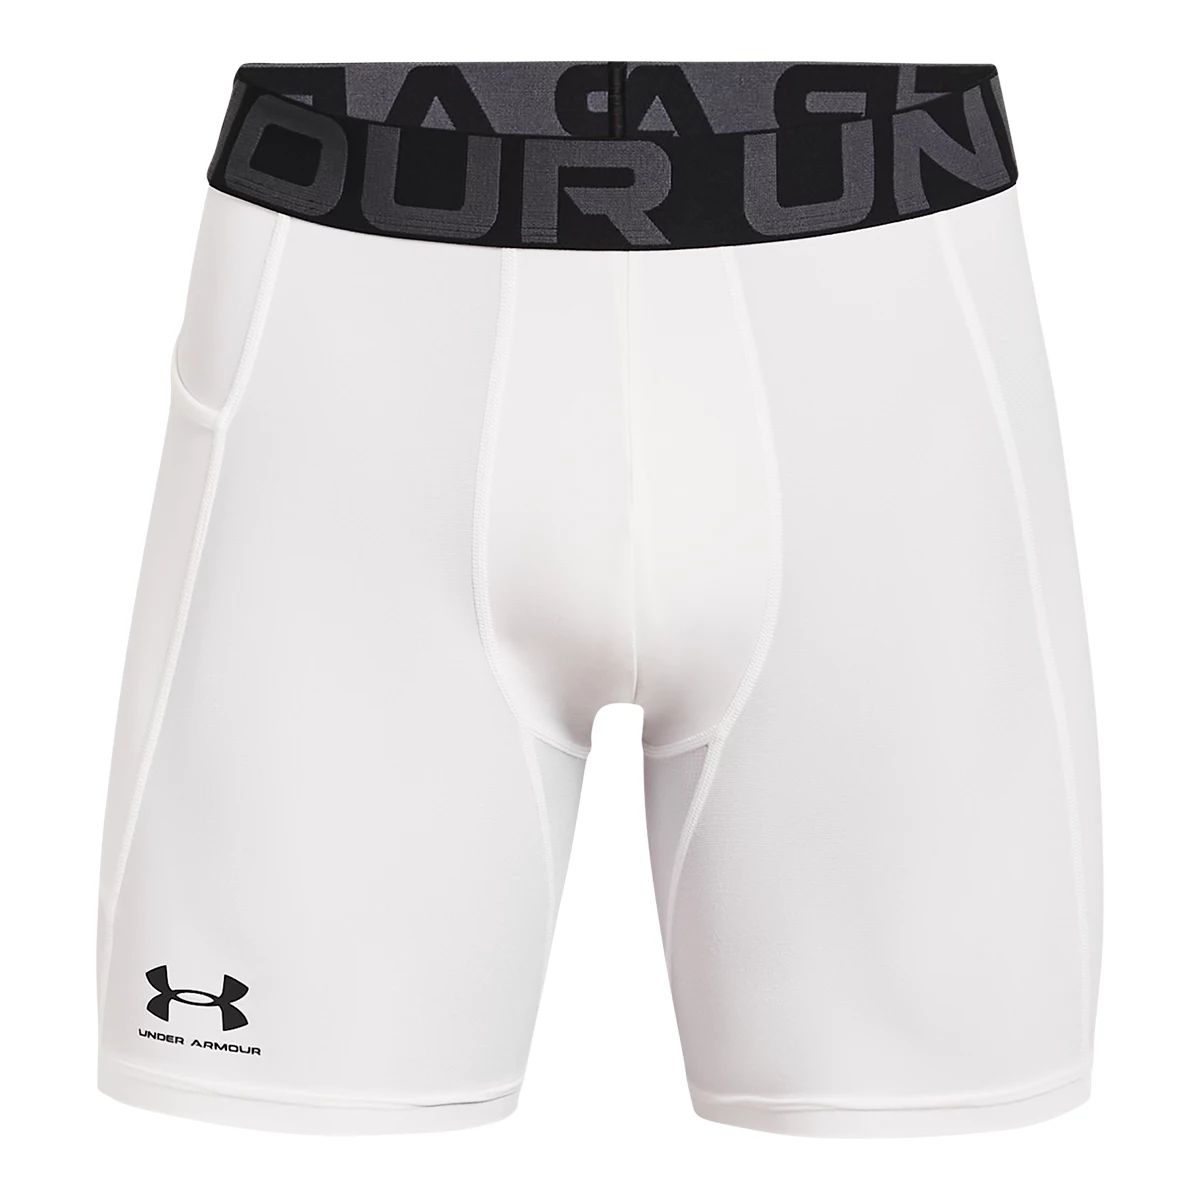 Under Armour Men's HeatGear® 6" Shorts Tight Fit Gym Elastic Lightweight